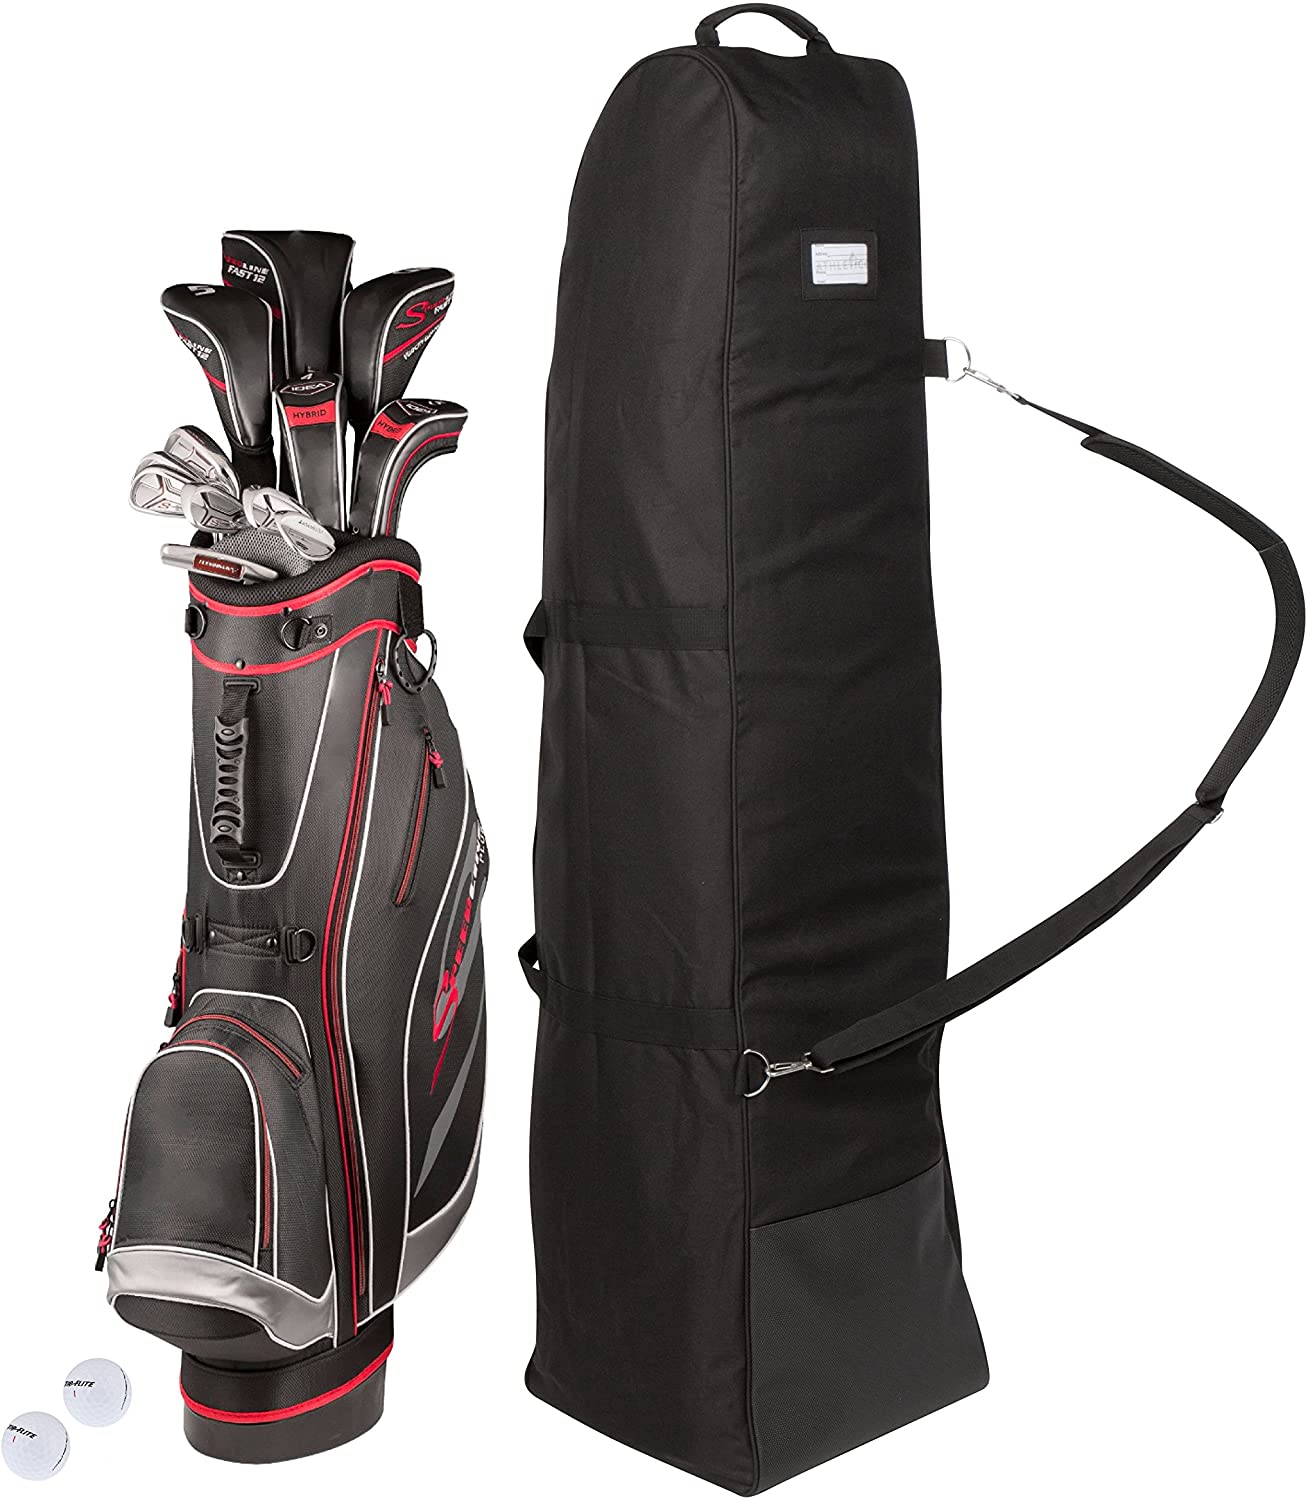 affix vervaldatum Voorschrijven Athletico Padded Golf Travel Bag | Athletico